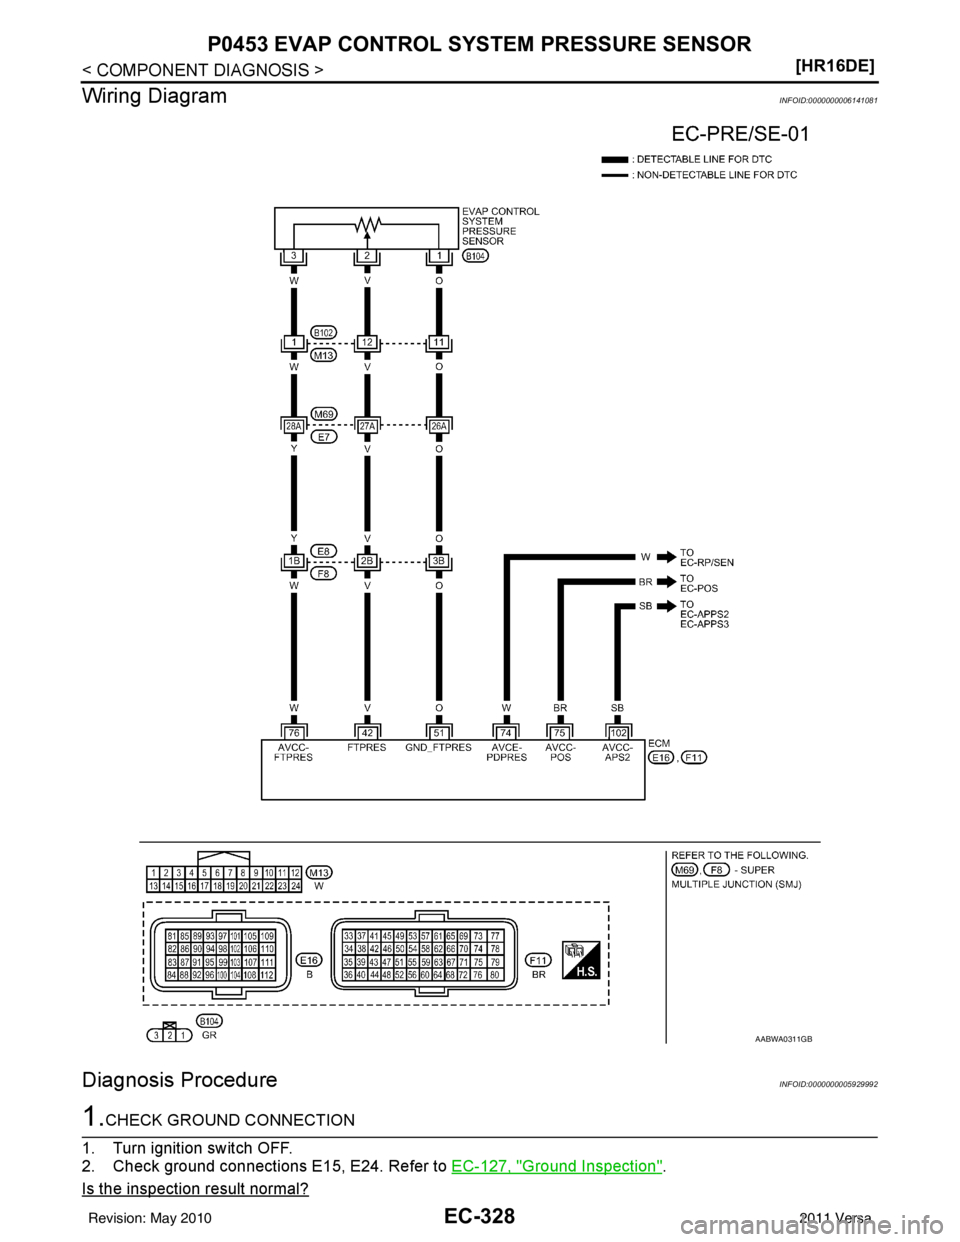 NISSAN LATIO 2011  Service Repair Manual EC-328
< COMPONENT DIAGNOSIS >[HR16DE]
P0453 EVAP CONTROL SYSTEM PRESSURE SENSOR
Wiring Diagram
INFOID:0000000006141081
Diagnosis ProcedureINFOID:0000000005929992
1.CHECK GROUND CONNECTION
1. Turn ign